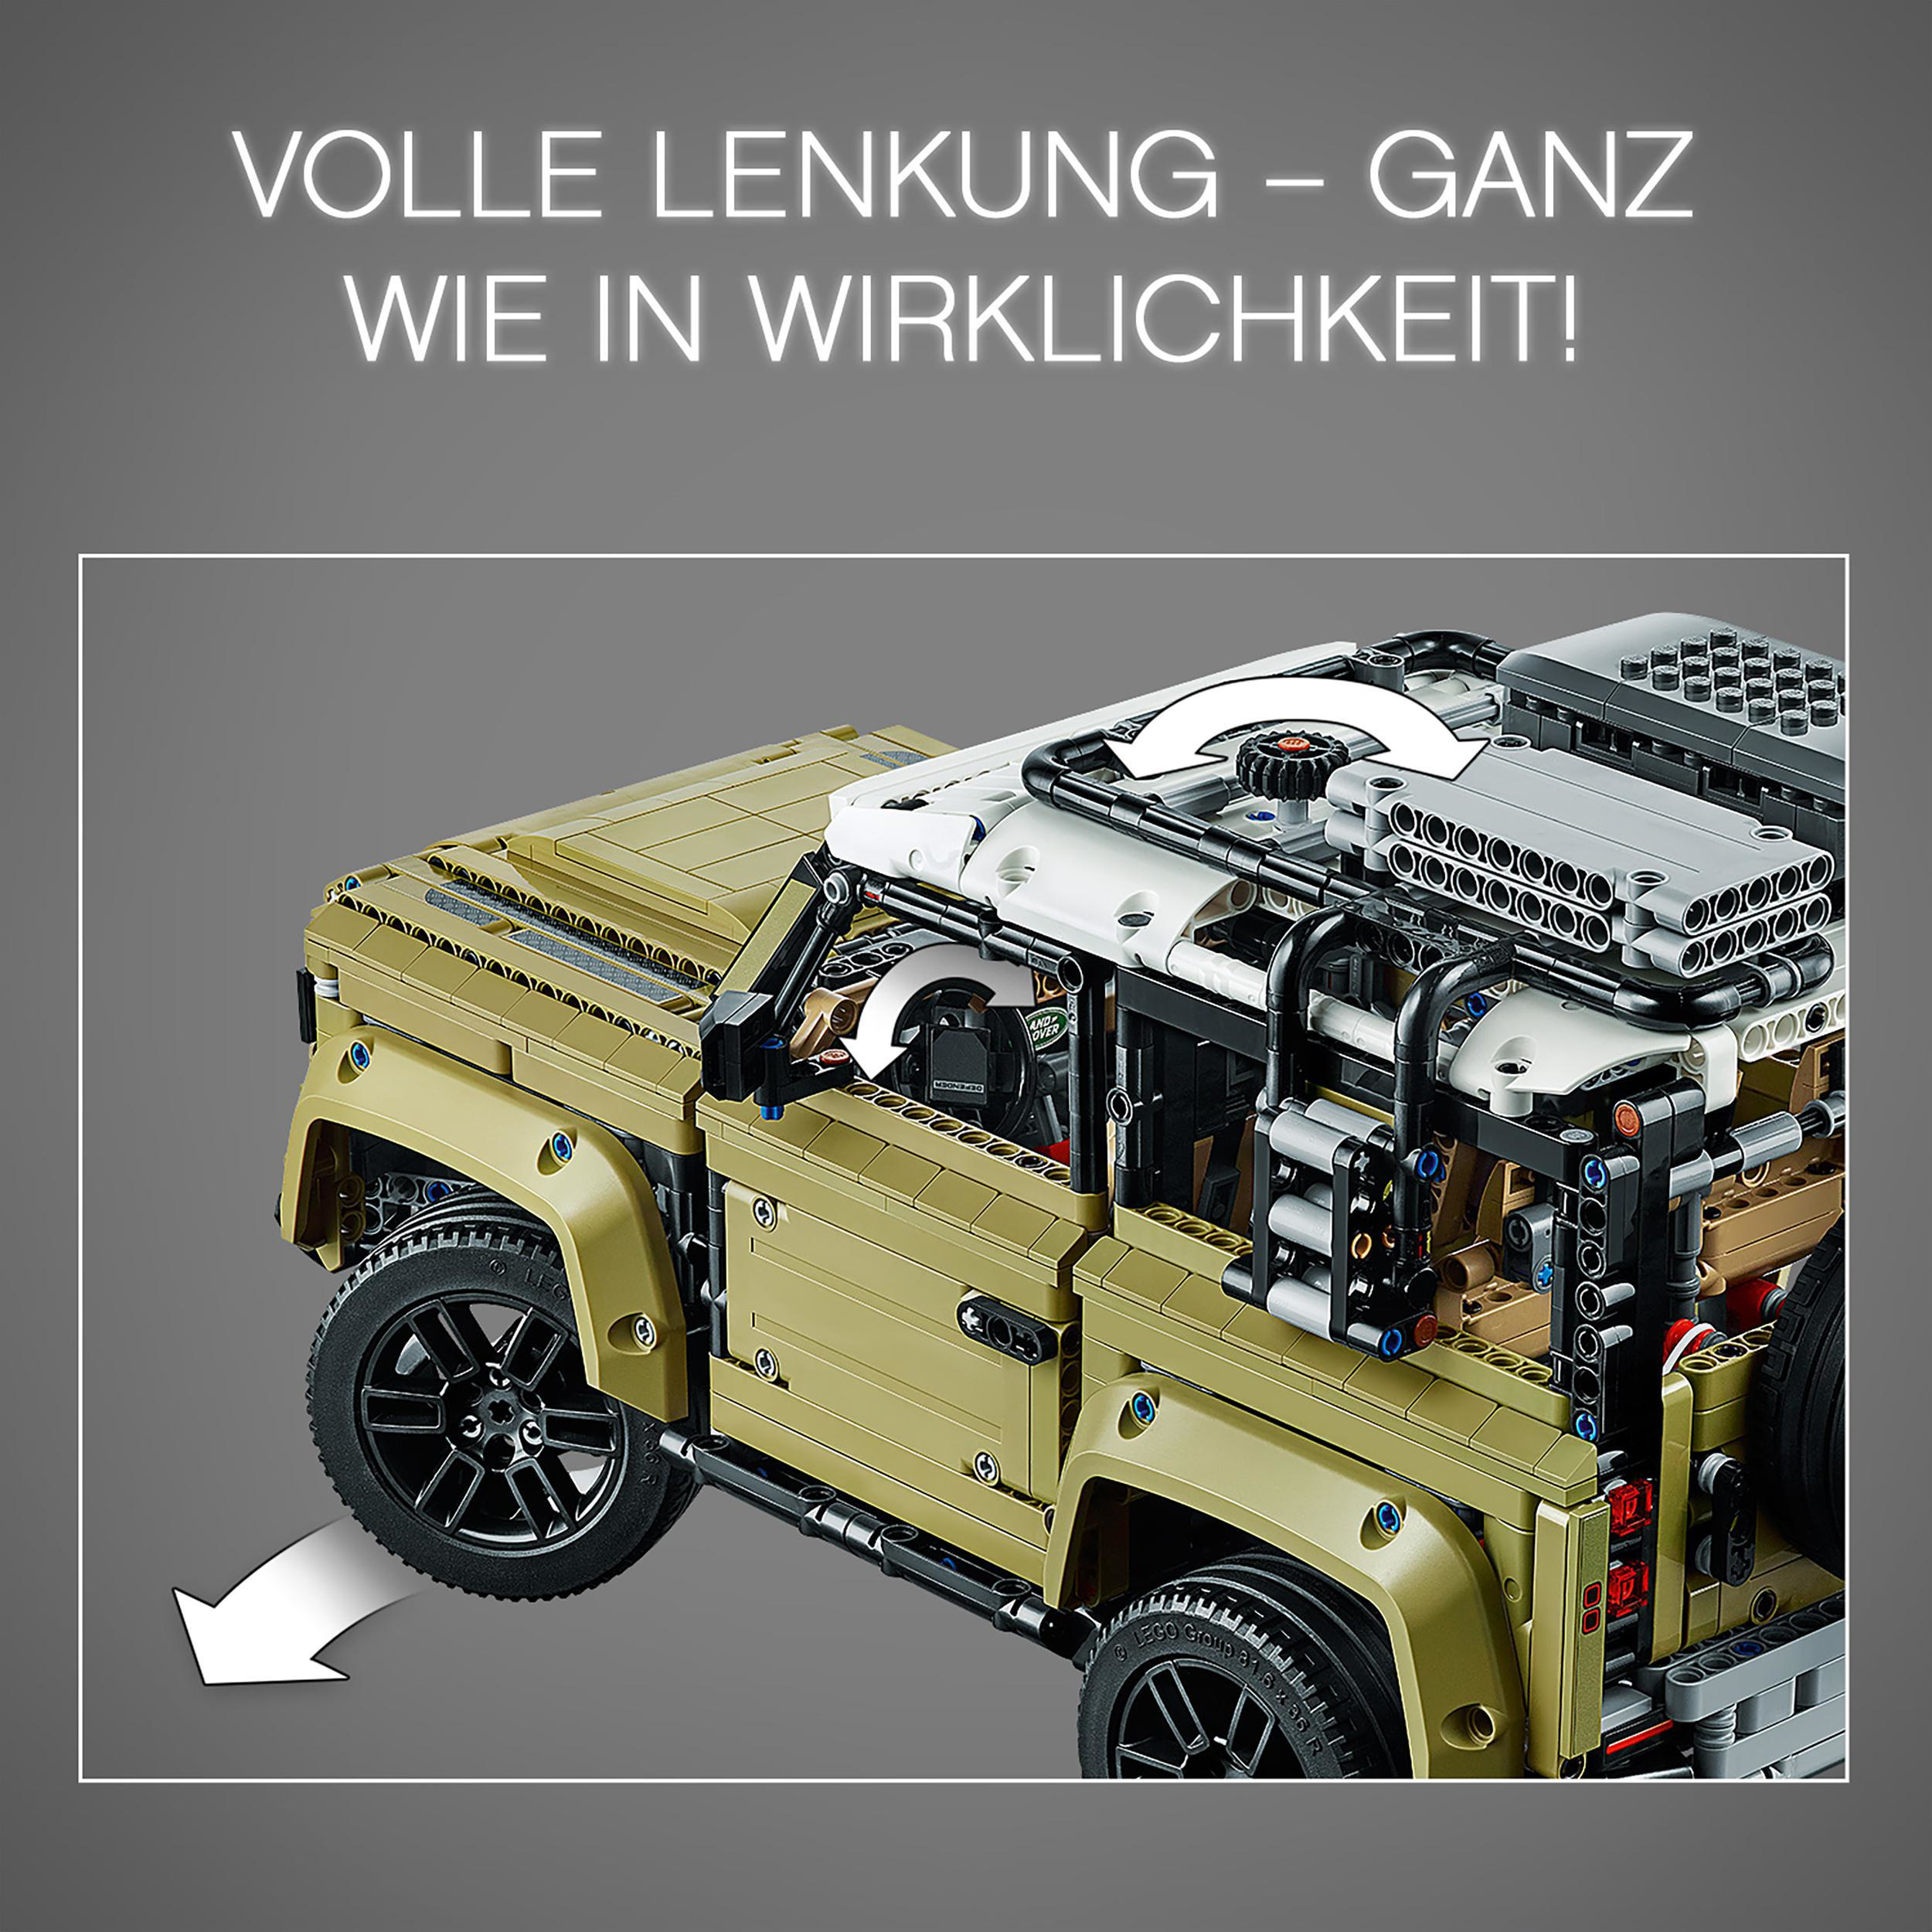 LEGO Technic Land Rover Defender